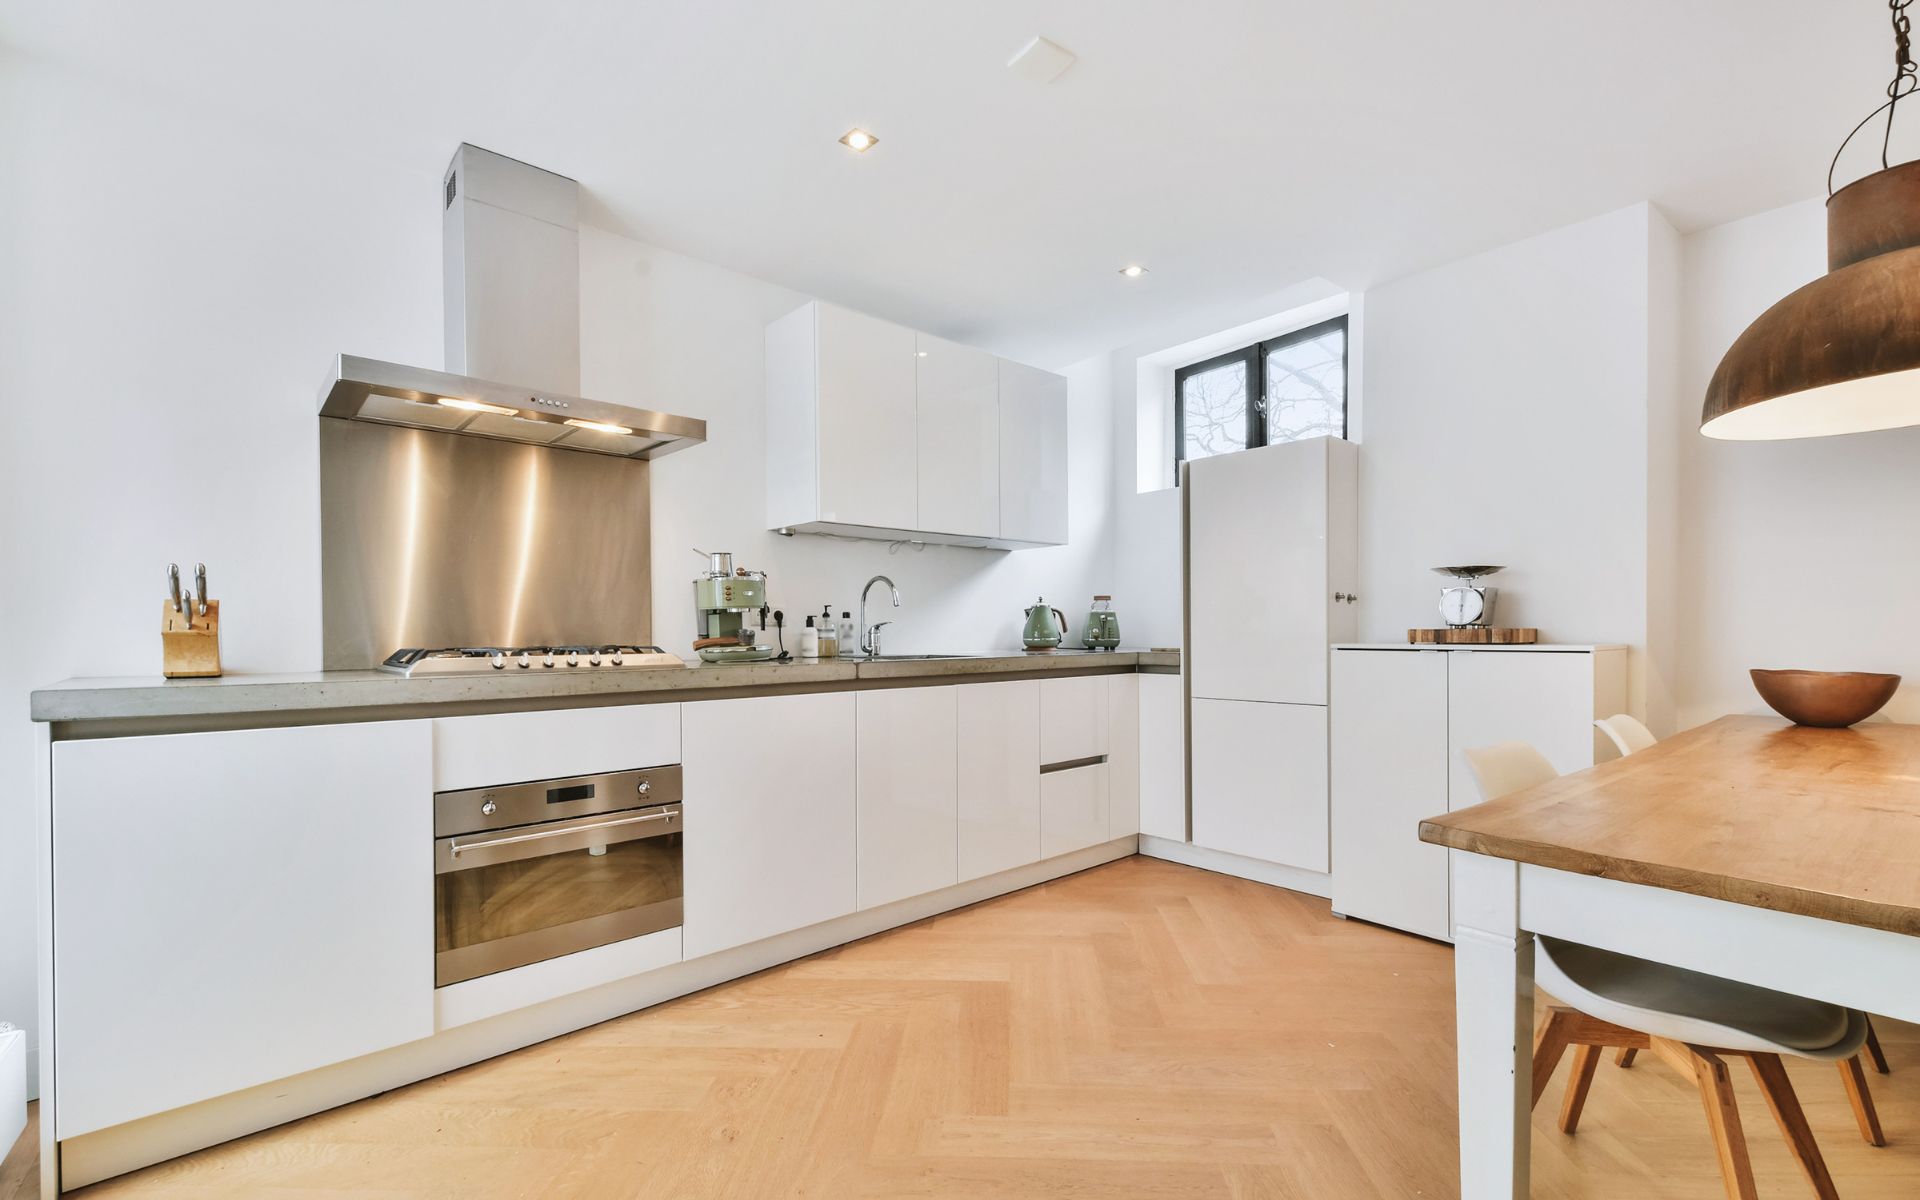 White kitchen for rental property